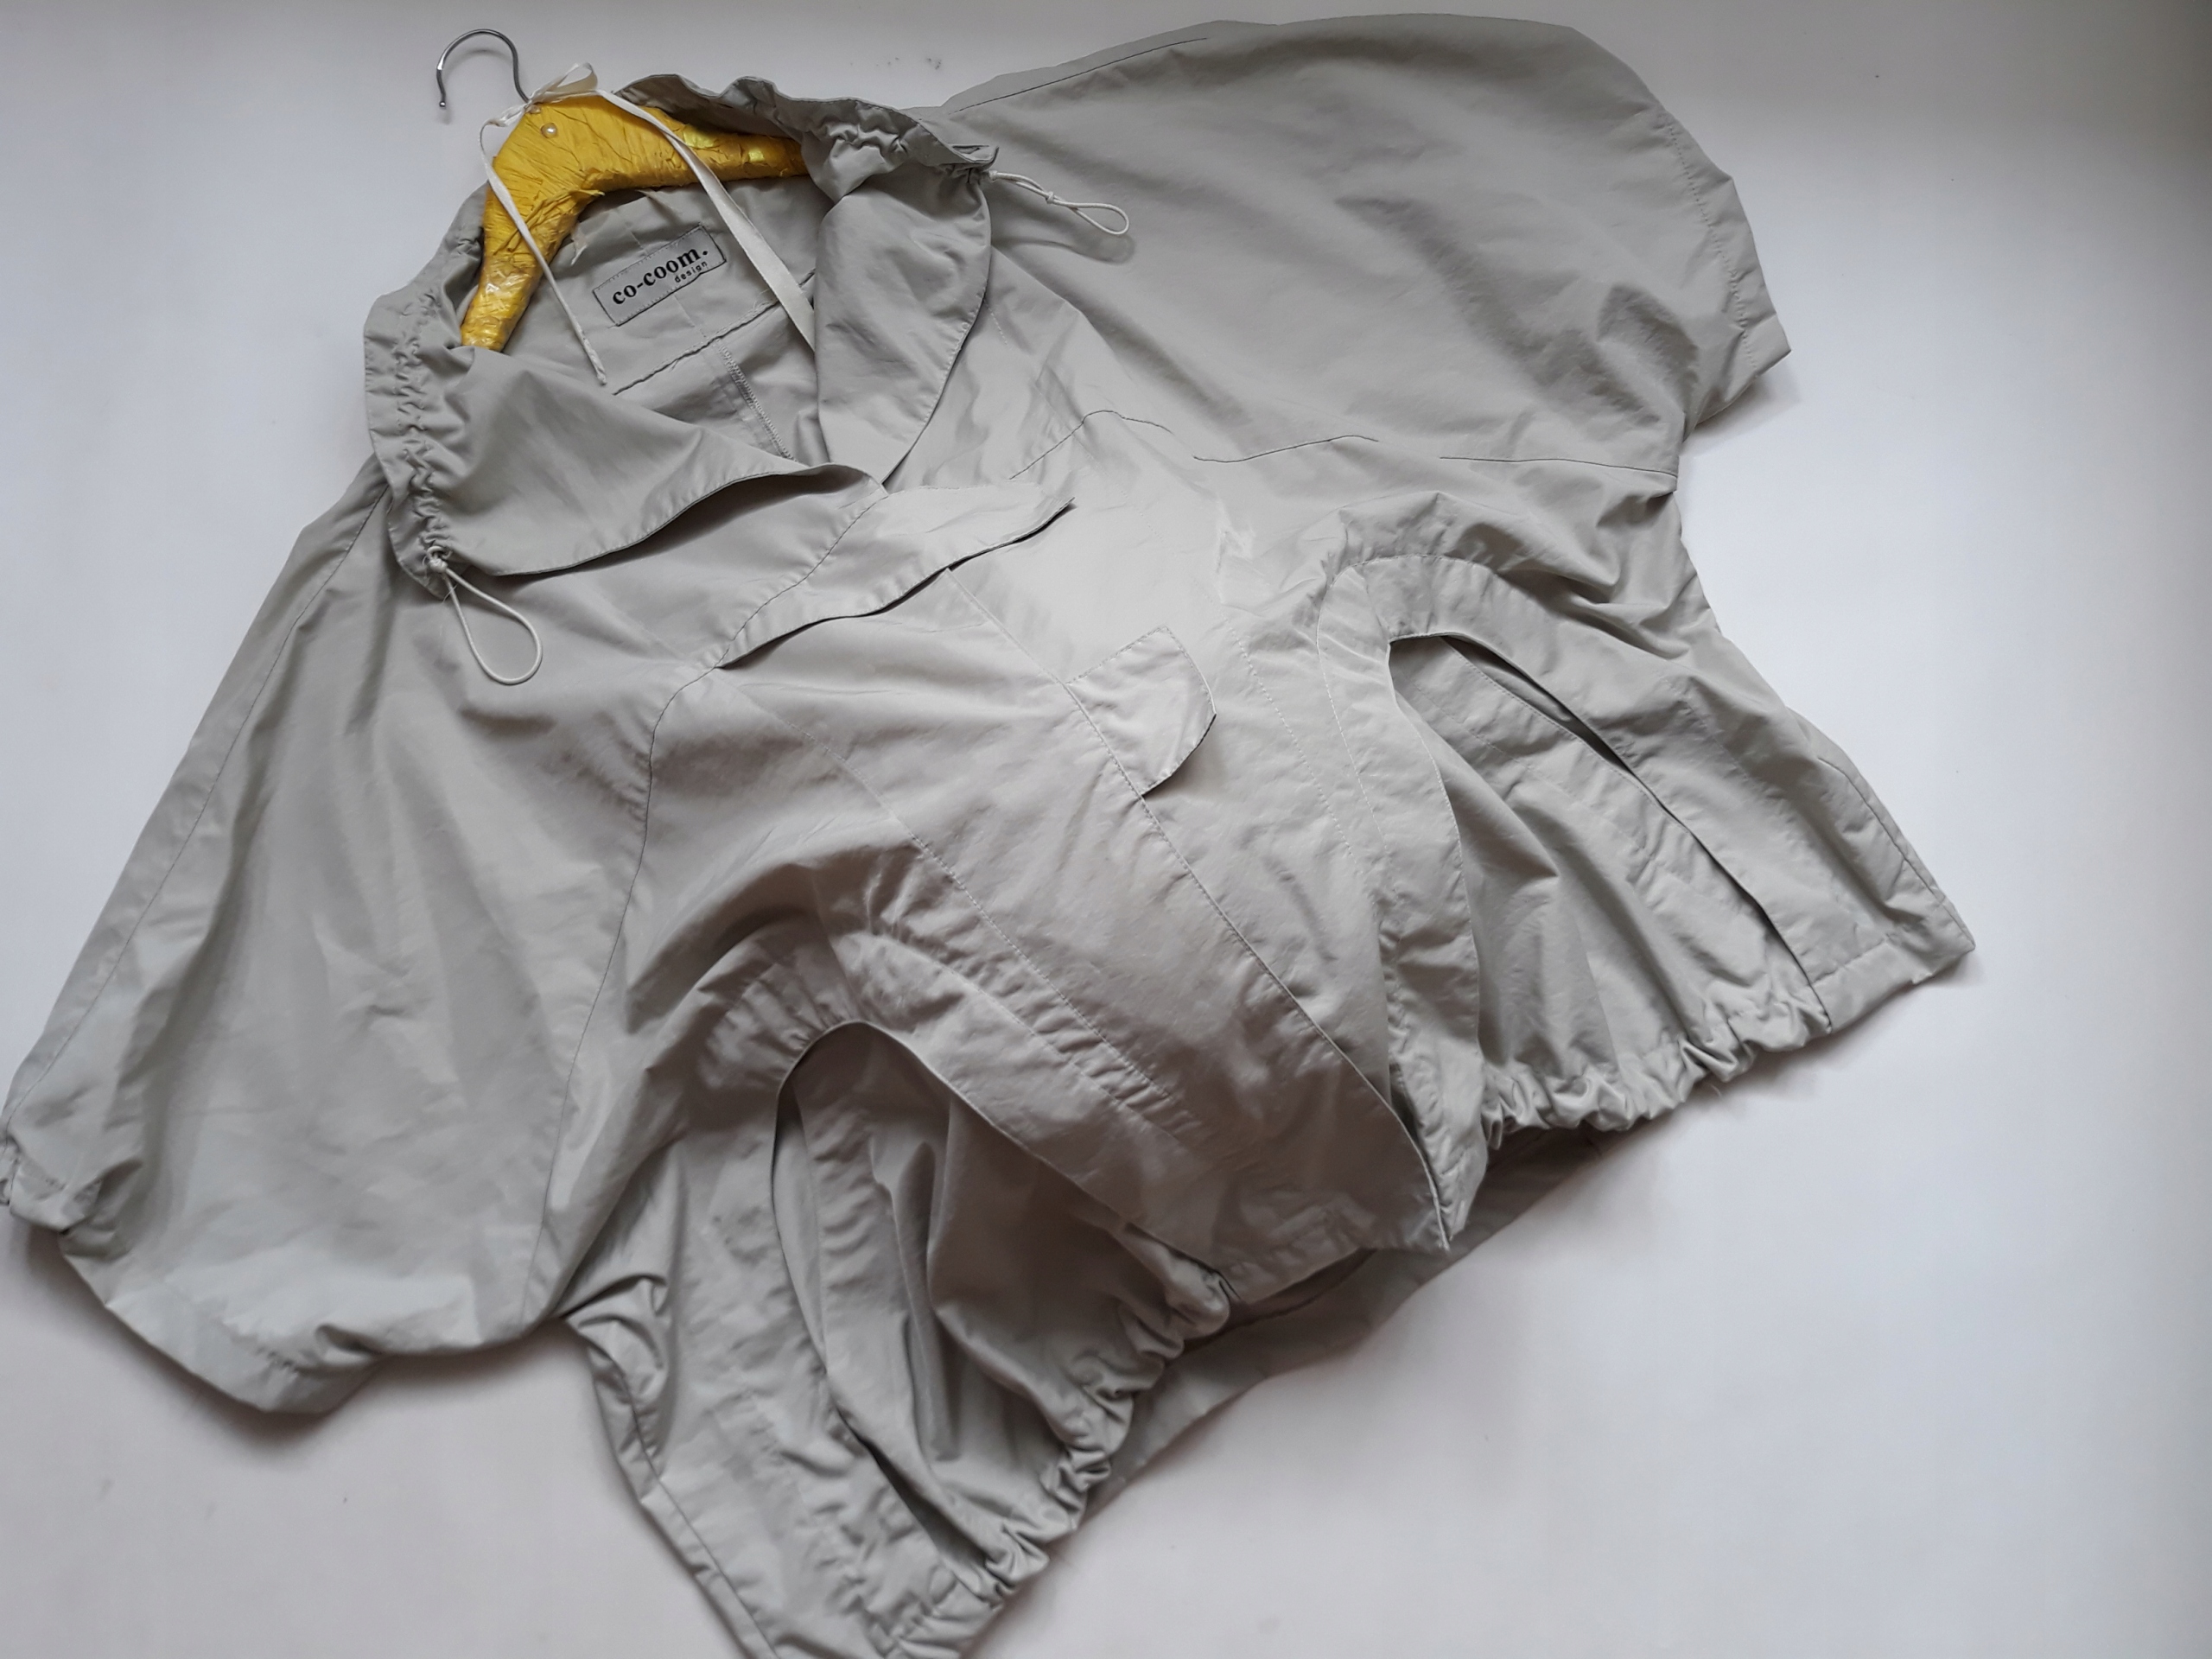 co-coom ok. 54/56 куртка для беременных